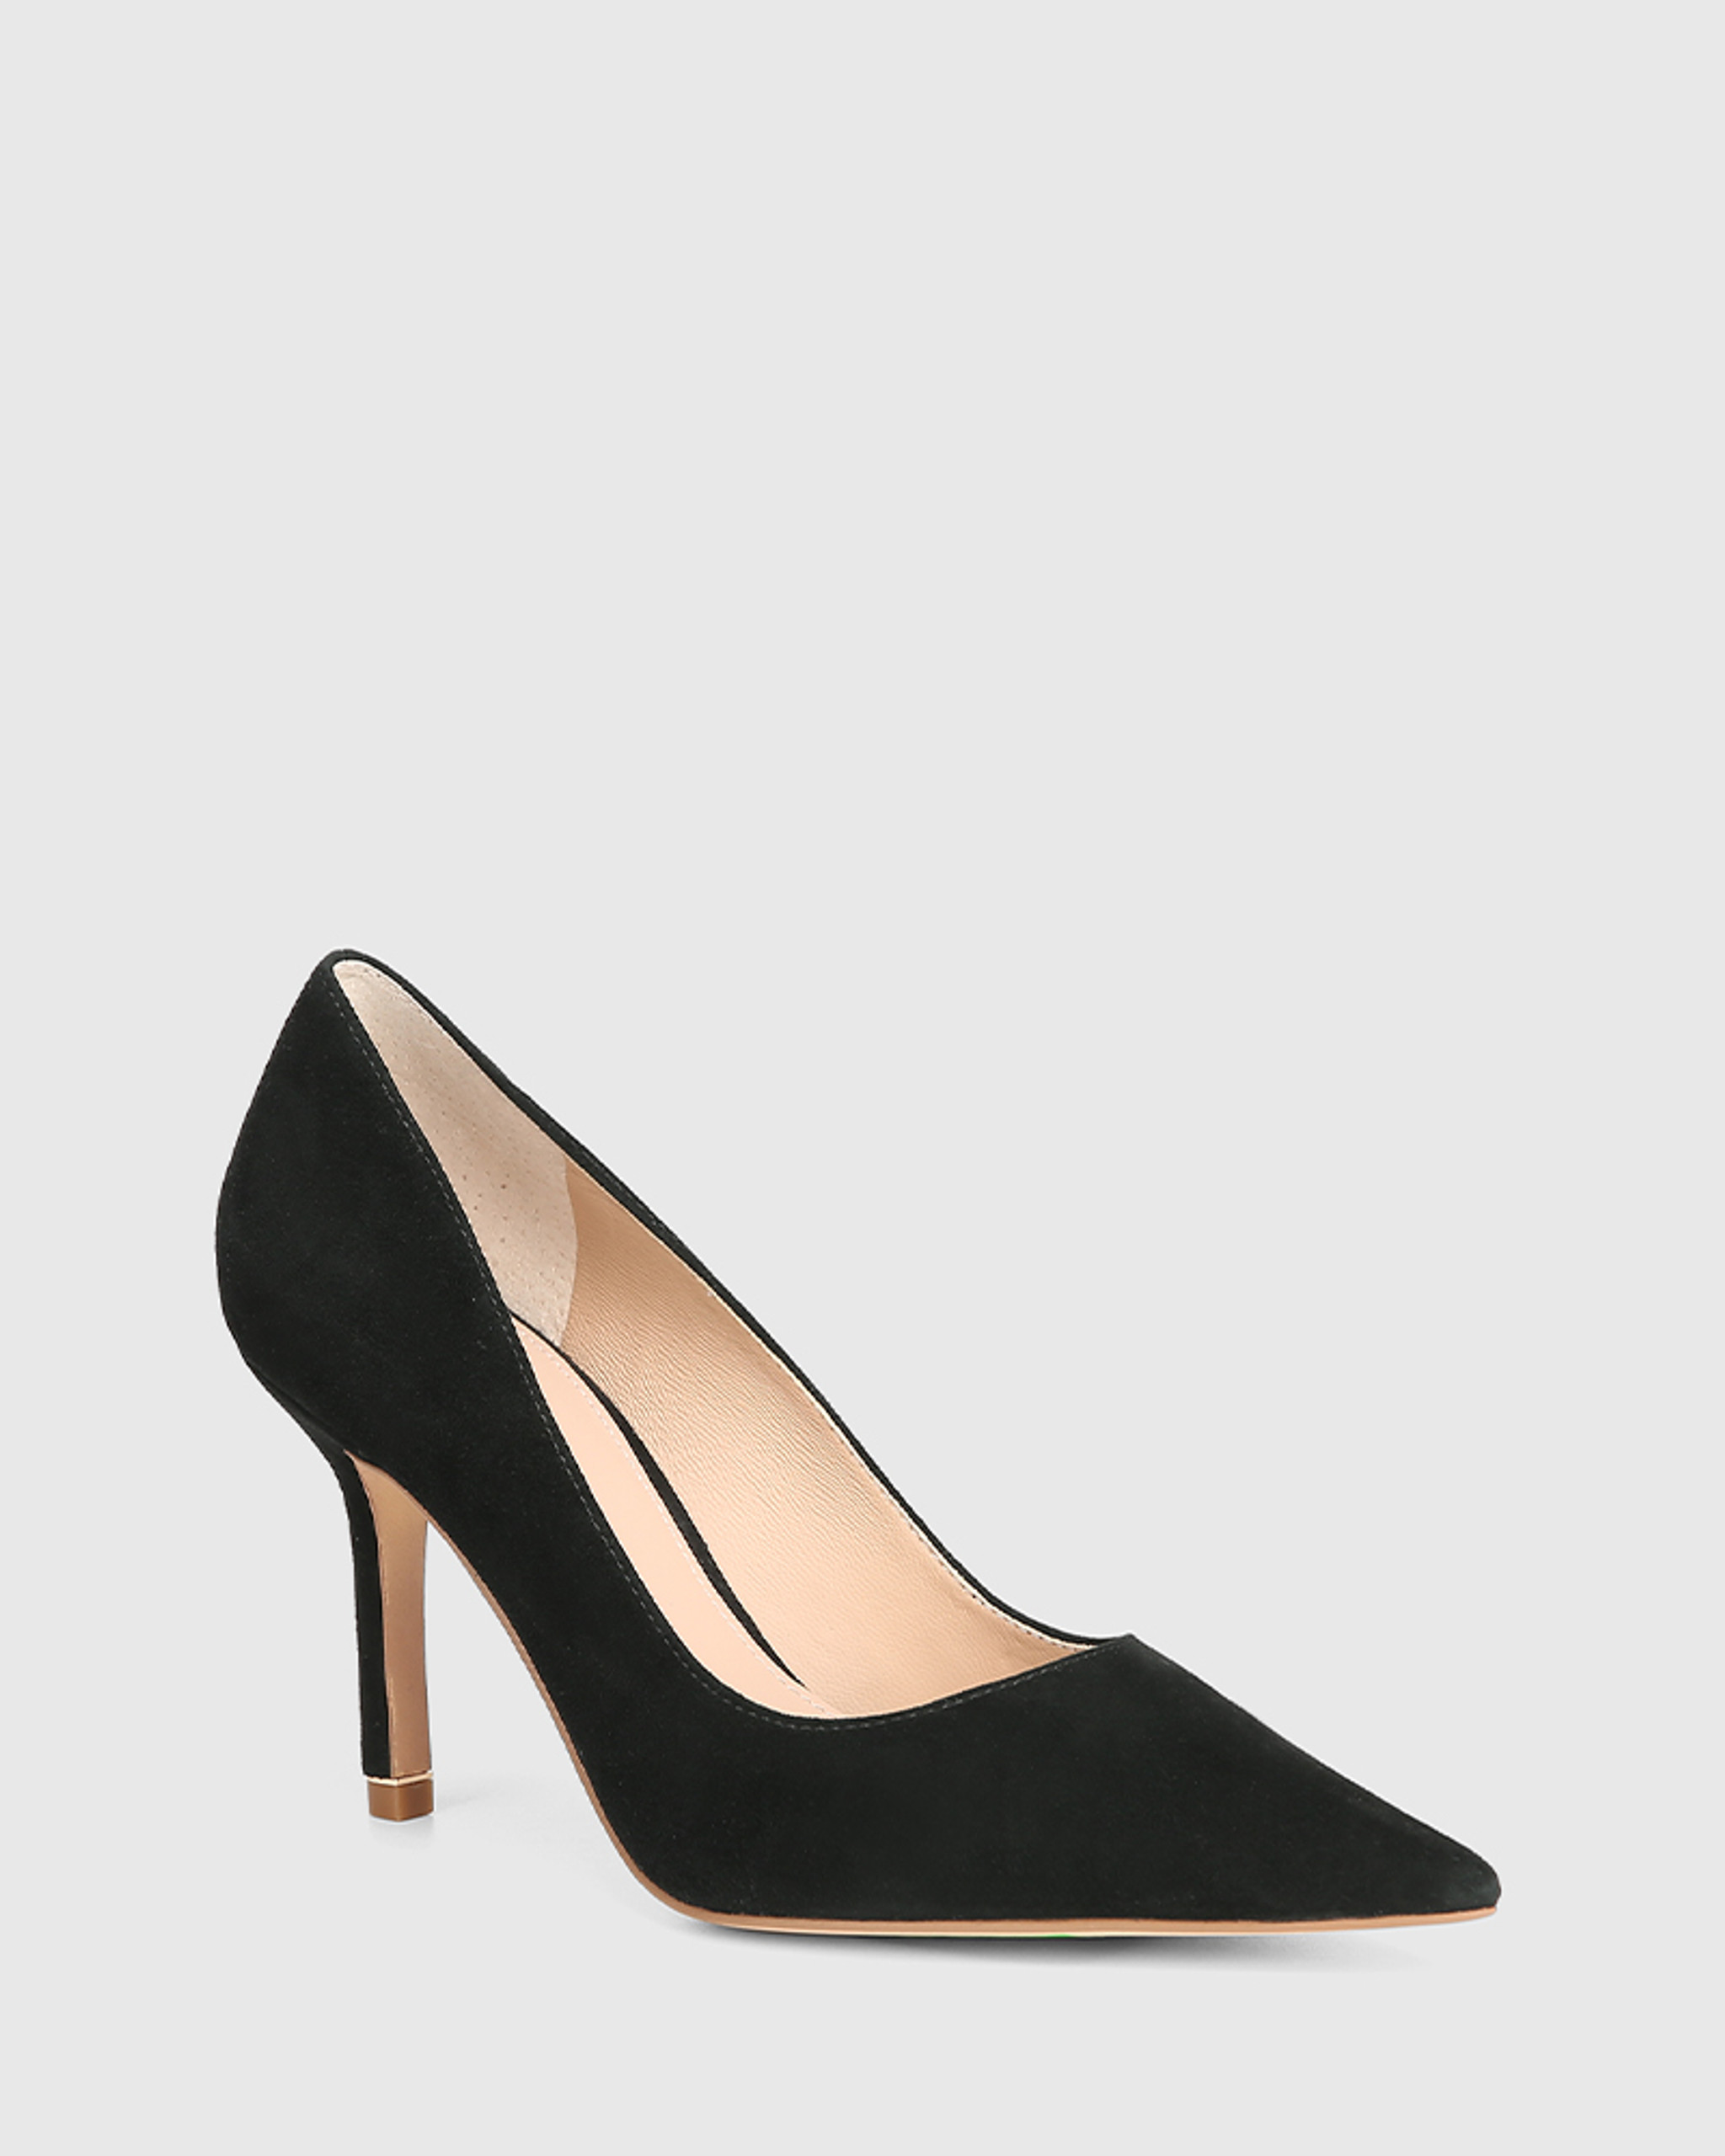 Kate Spade Heels Kylah Pumps Black Suede Block Heeled Square Toe Shoes Size  6 | eBay